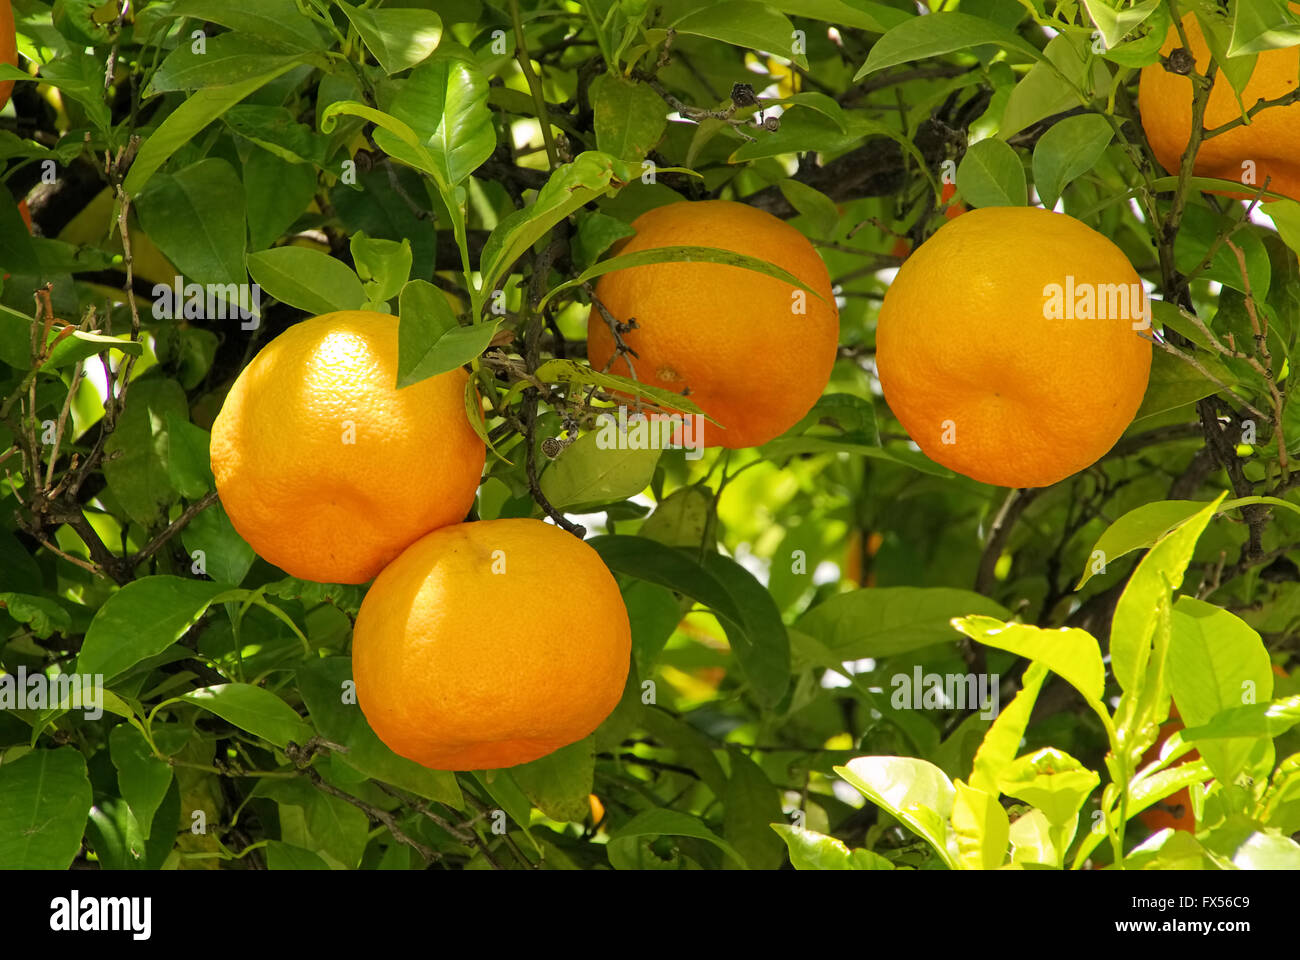 Orange am Baum - frutta di arancia su albero 08 Foto Stock